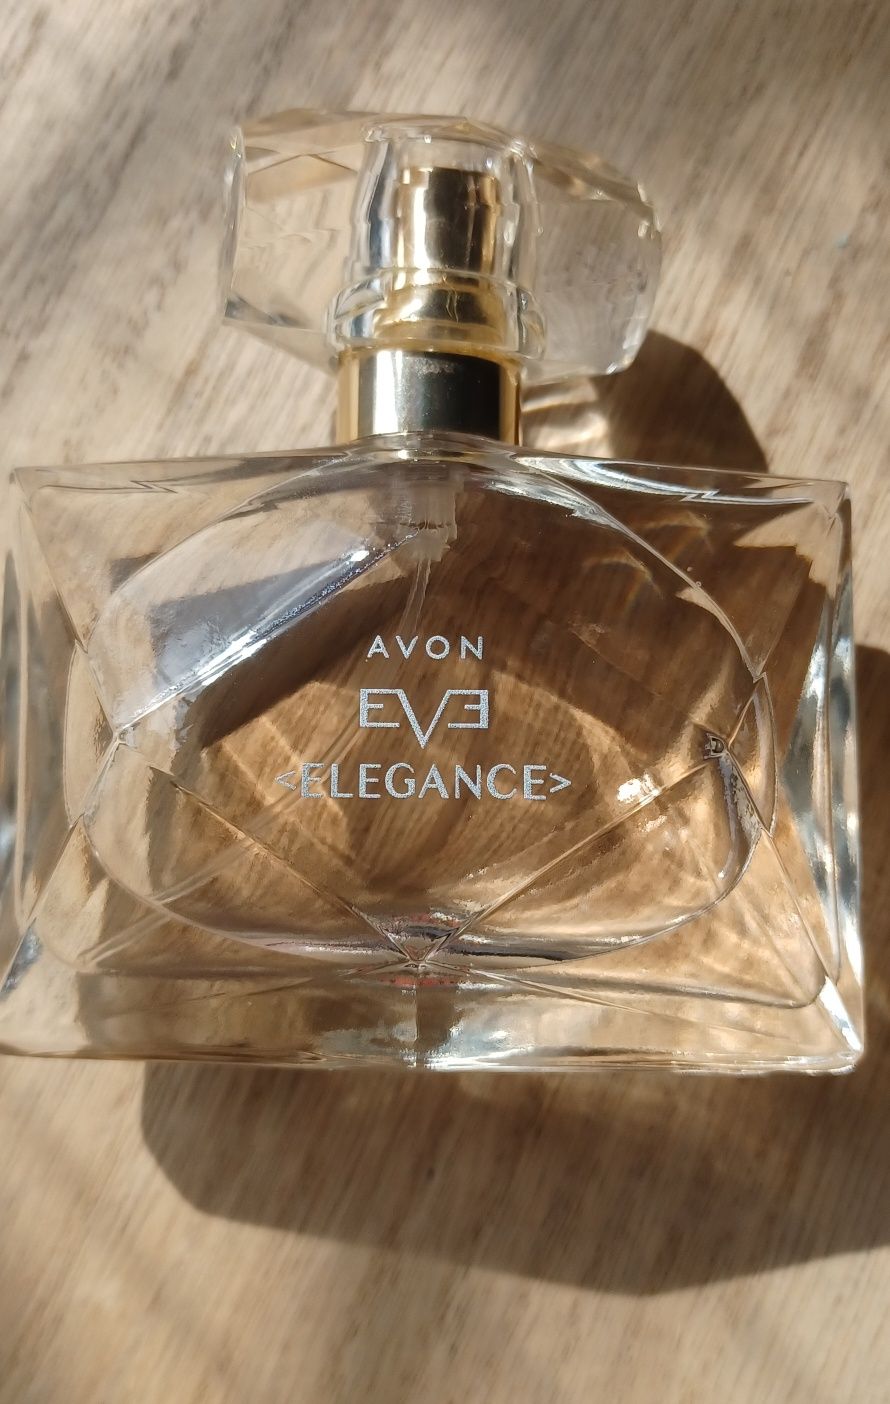 Eve Elegance Avon 50 ml